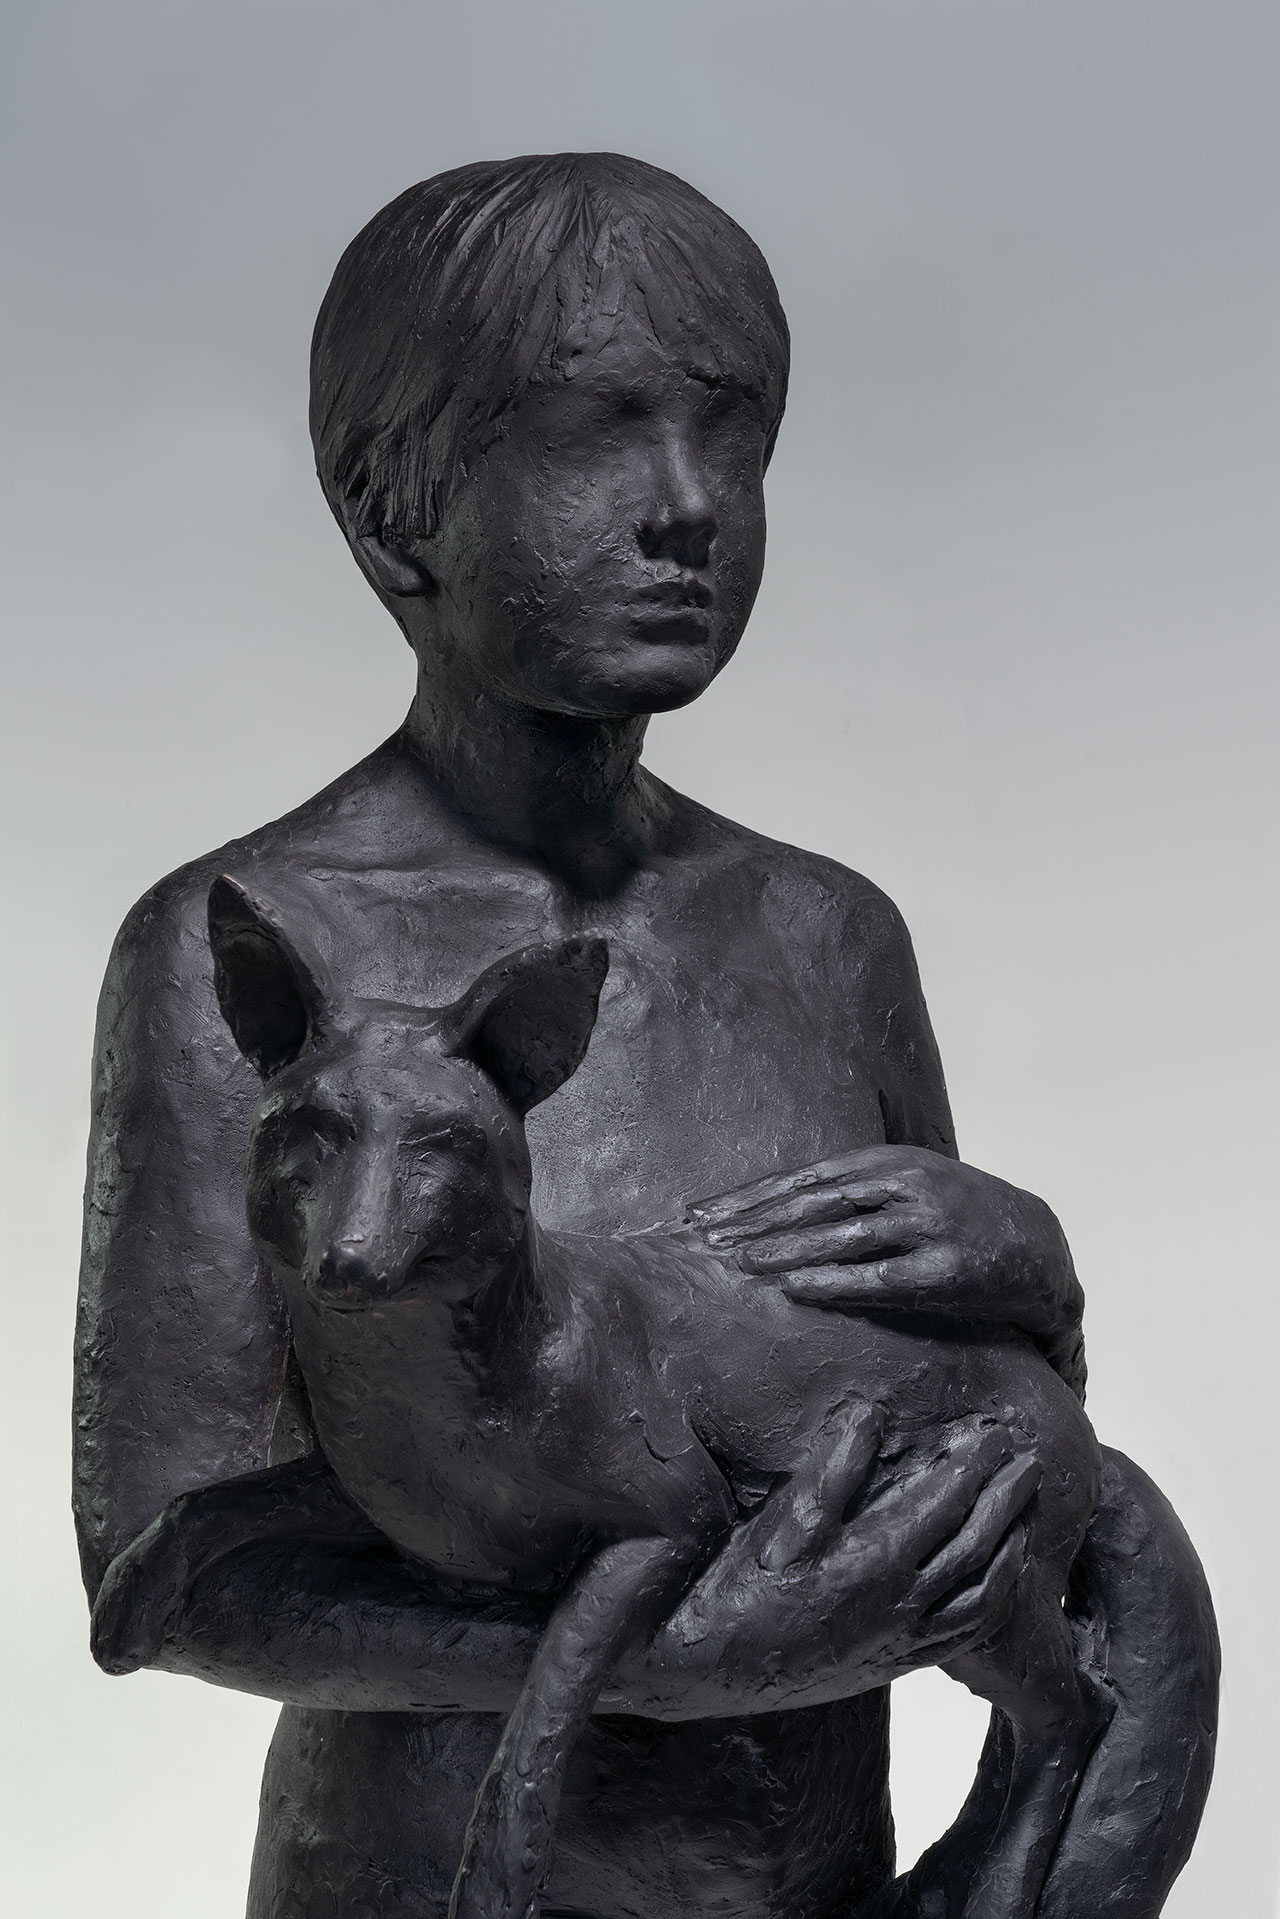 Laurent Grasso, Untitled, 2022 (in progress). Bronze. Photo Stefano Baroni. © Laurent Grasso / ADAGP, Paris, 2022. Courtesy of the artist and Perrotin